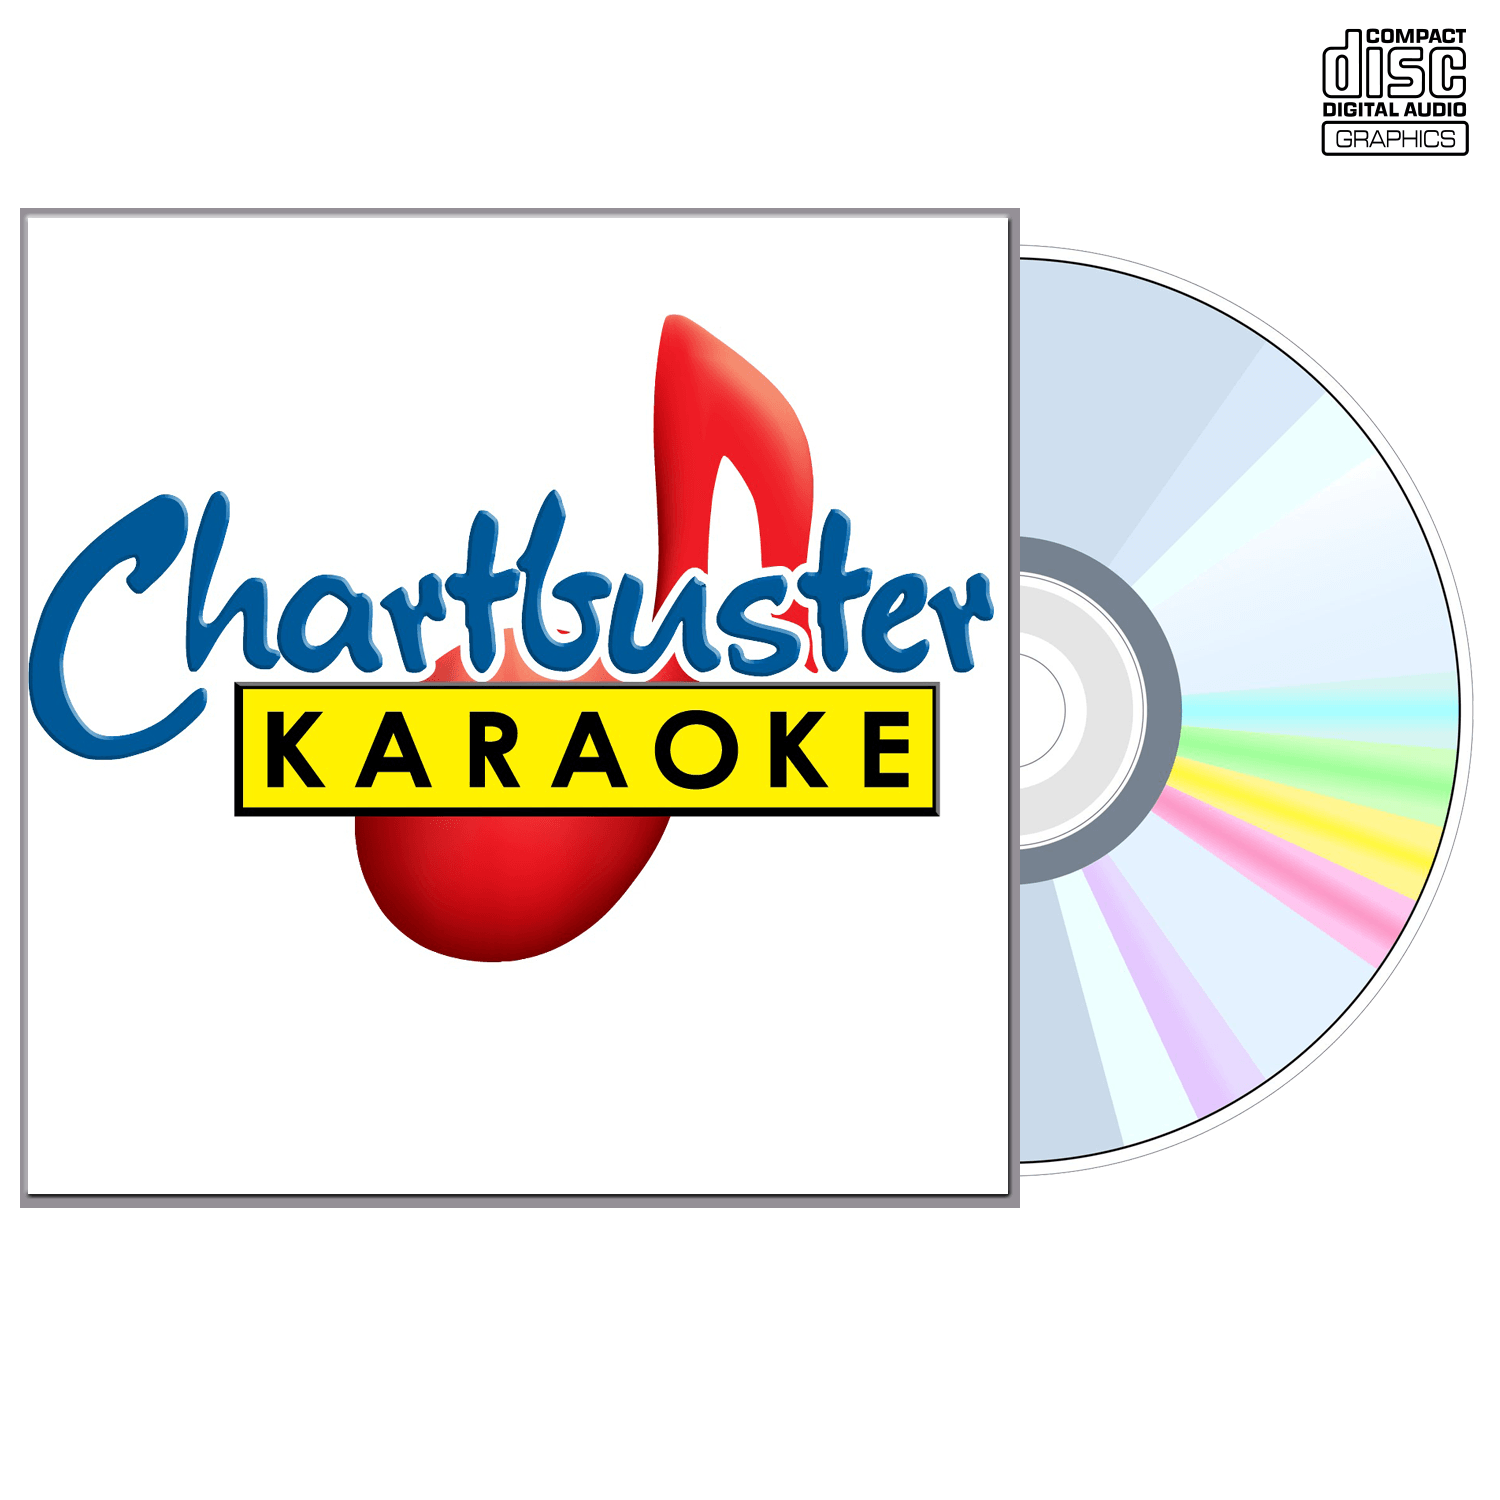 Best Loved Duets Vol 2 - CD+G - Chartbuster Karaoke - Karaoke Home Entertainment